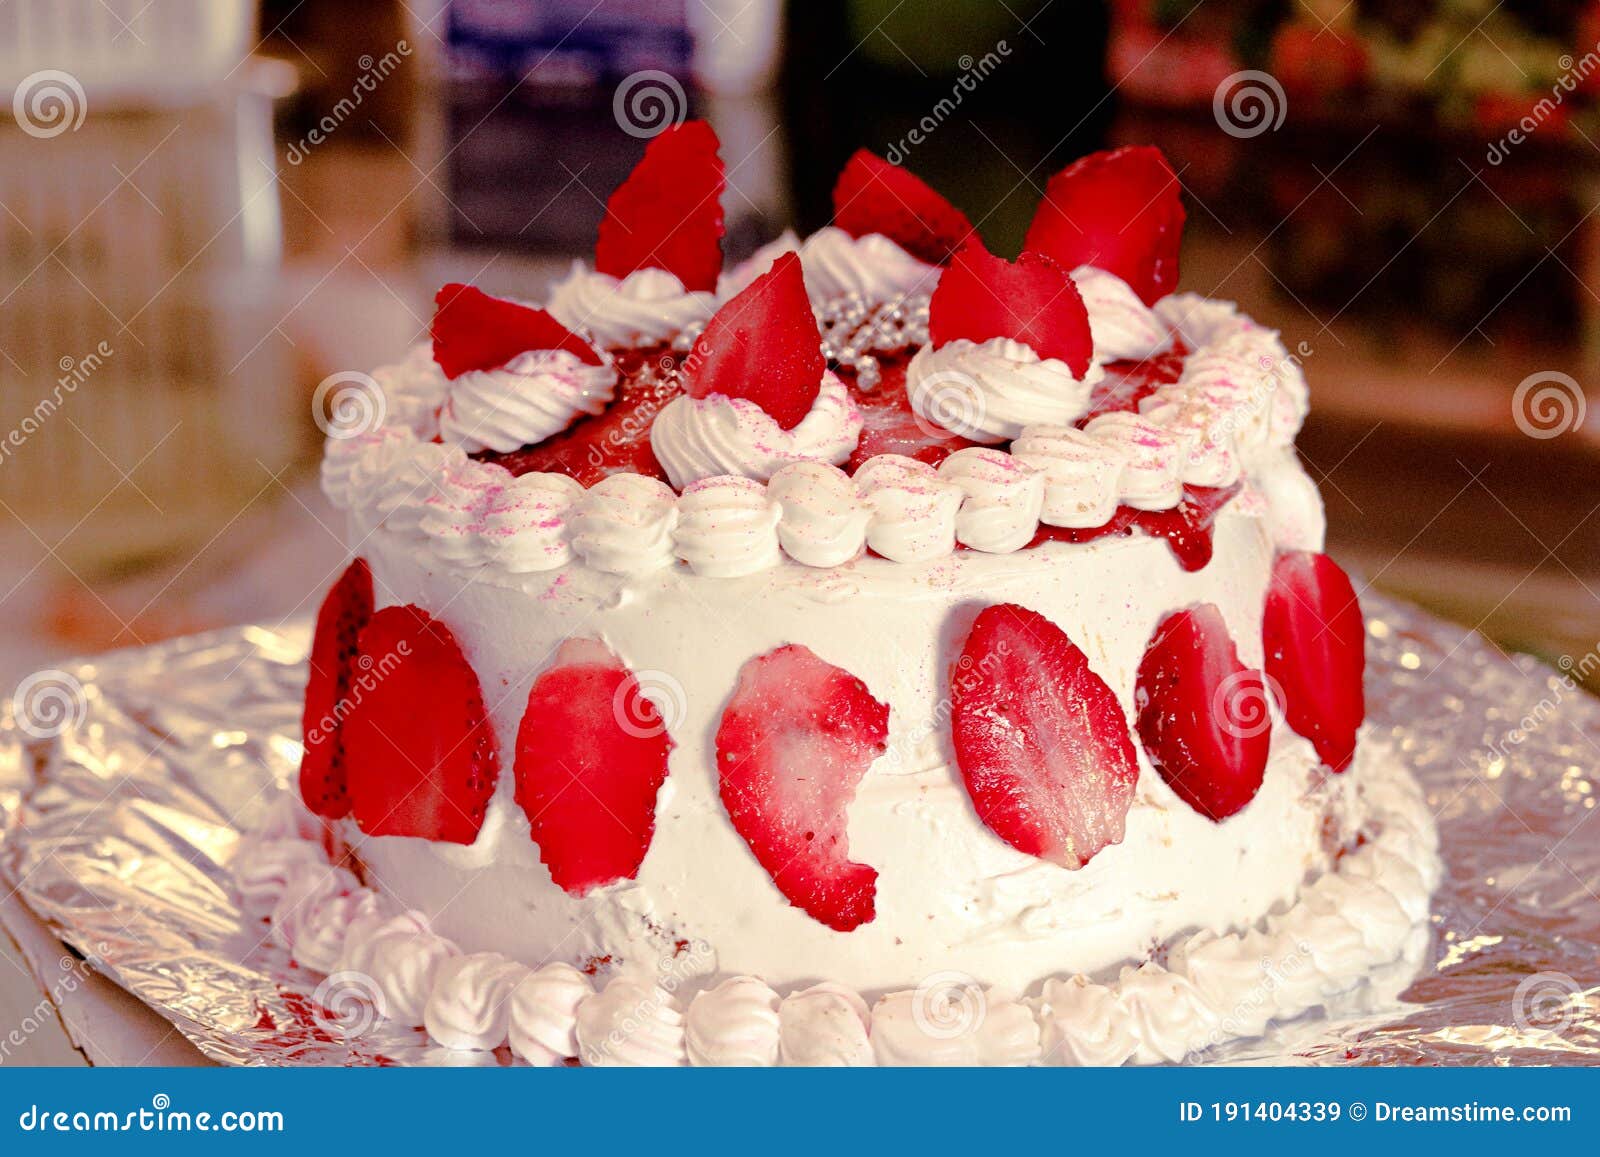 Whipped Cream and Strawberry Big Cake Stock Image - Image of ...